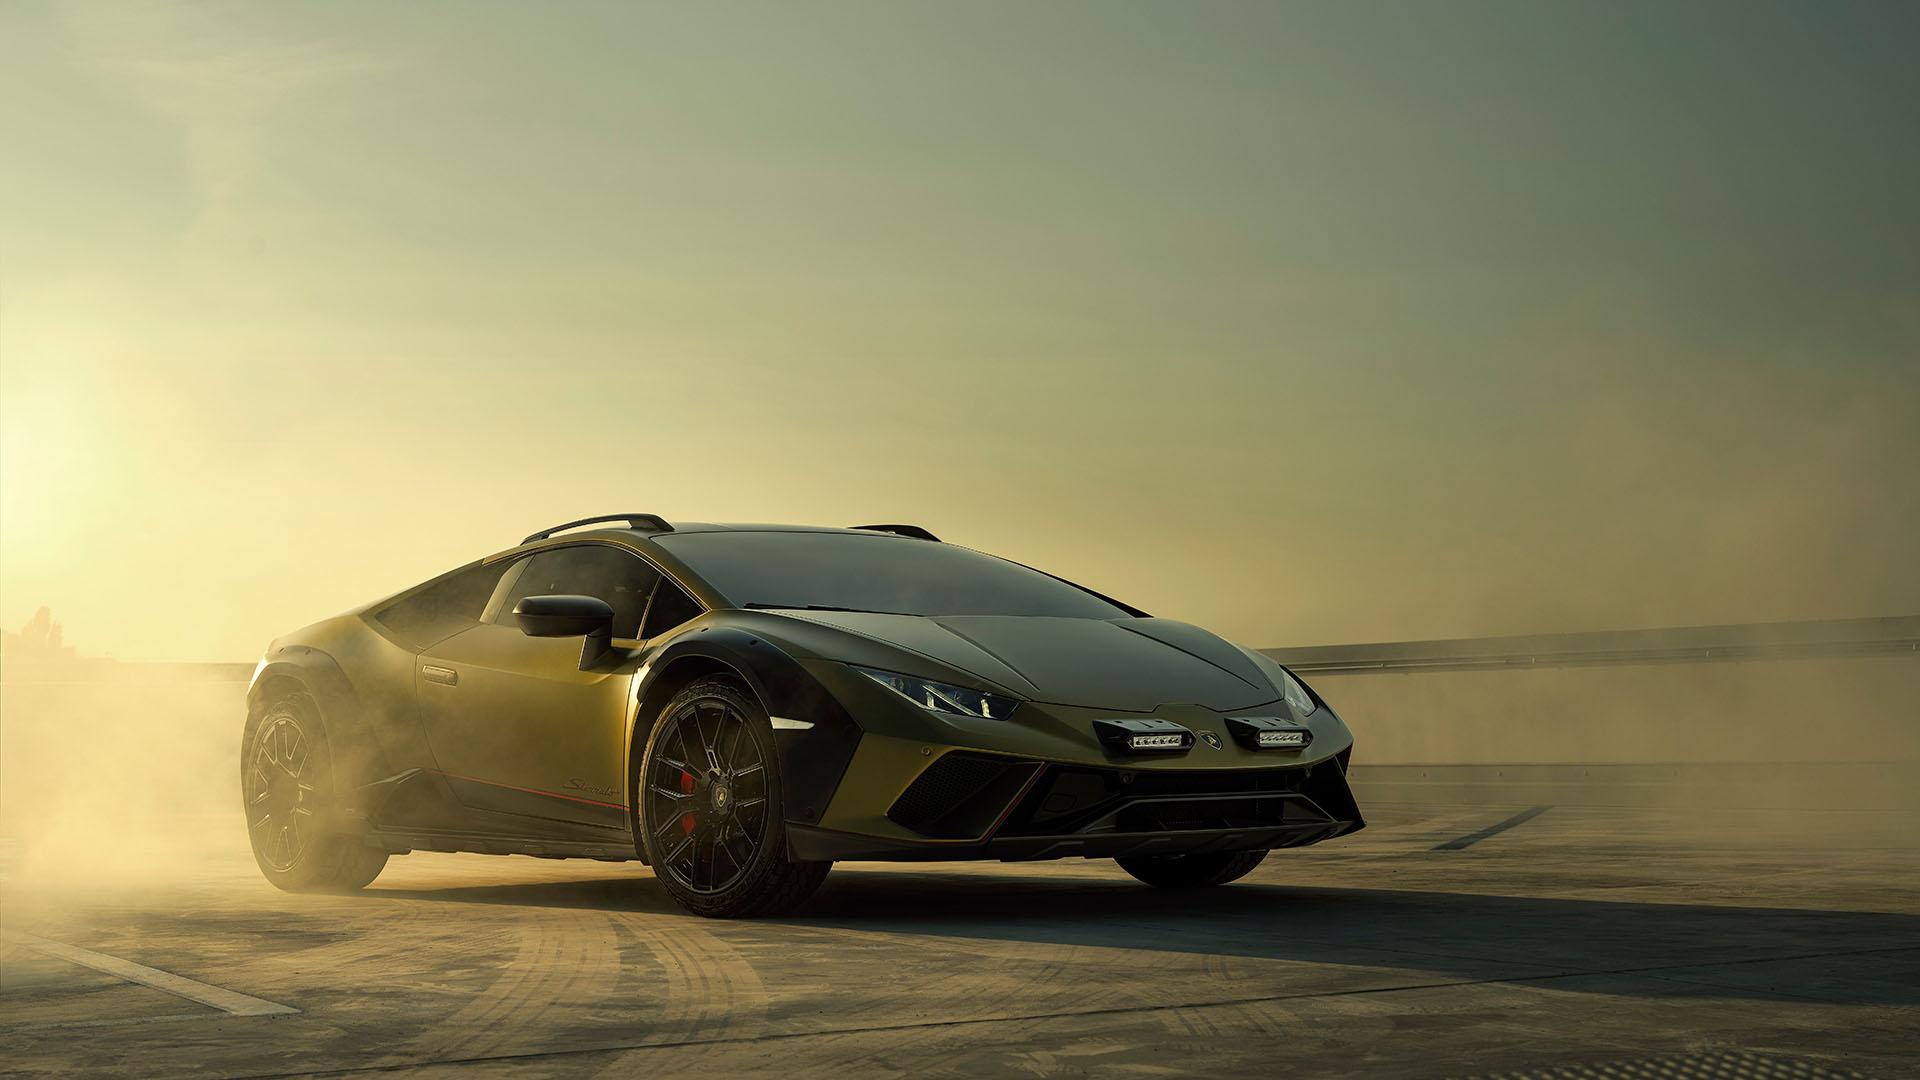 Lamborghini with naturally aspirated engines